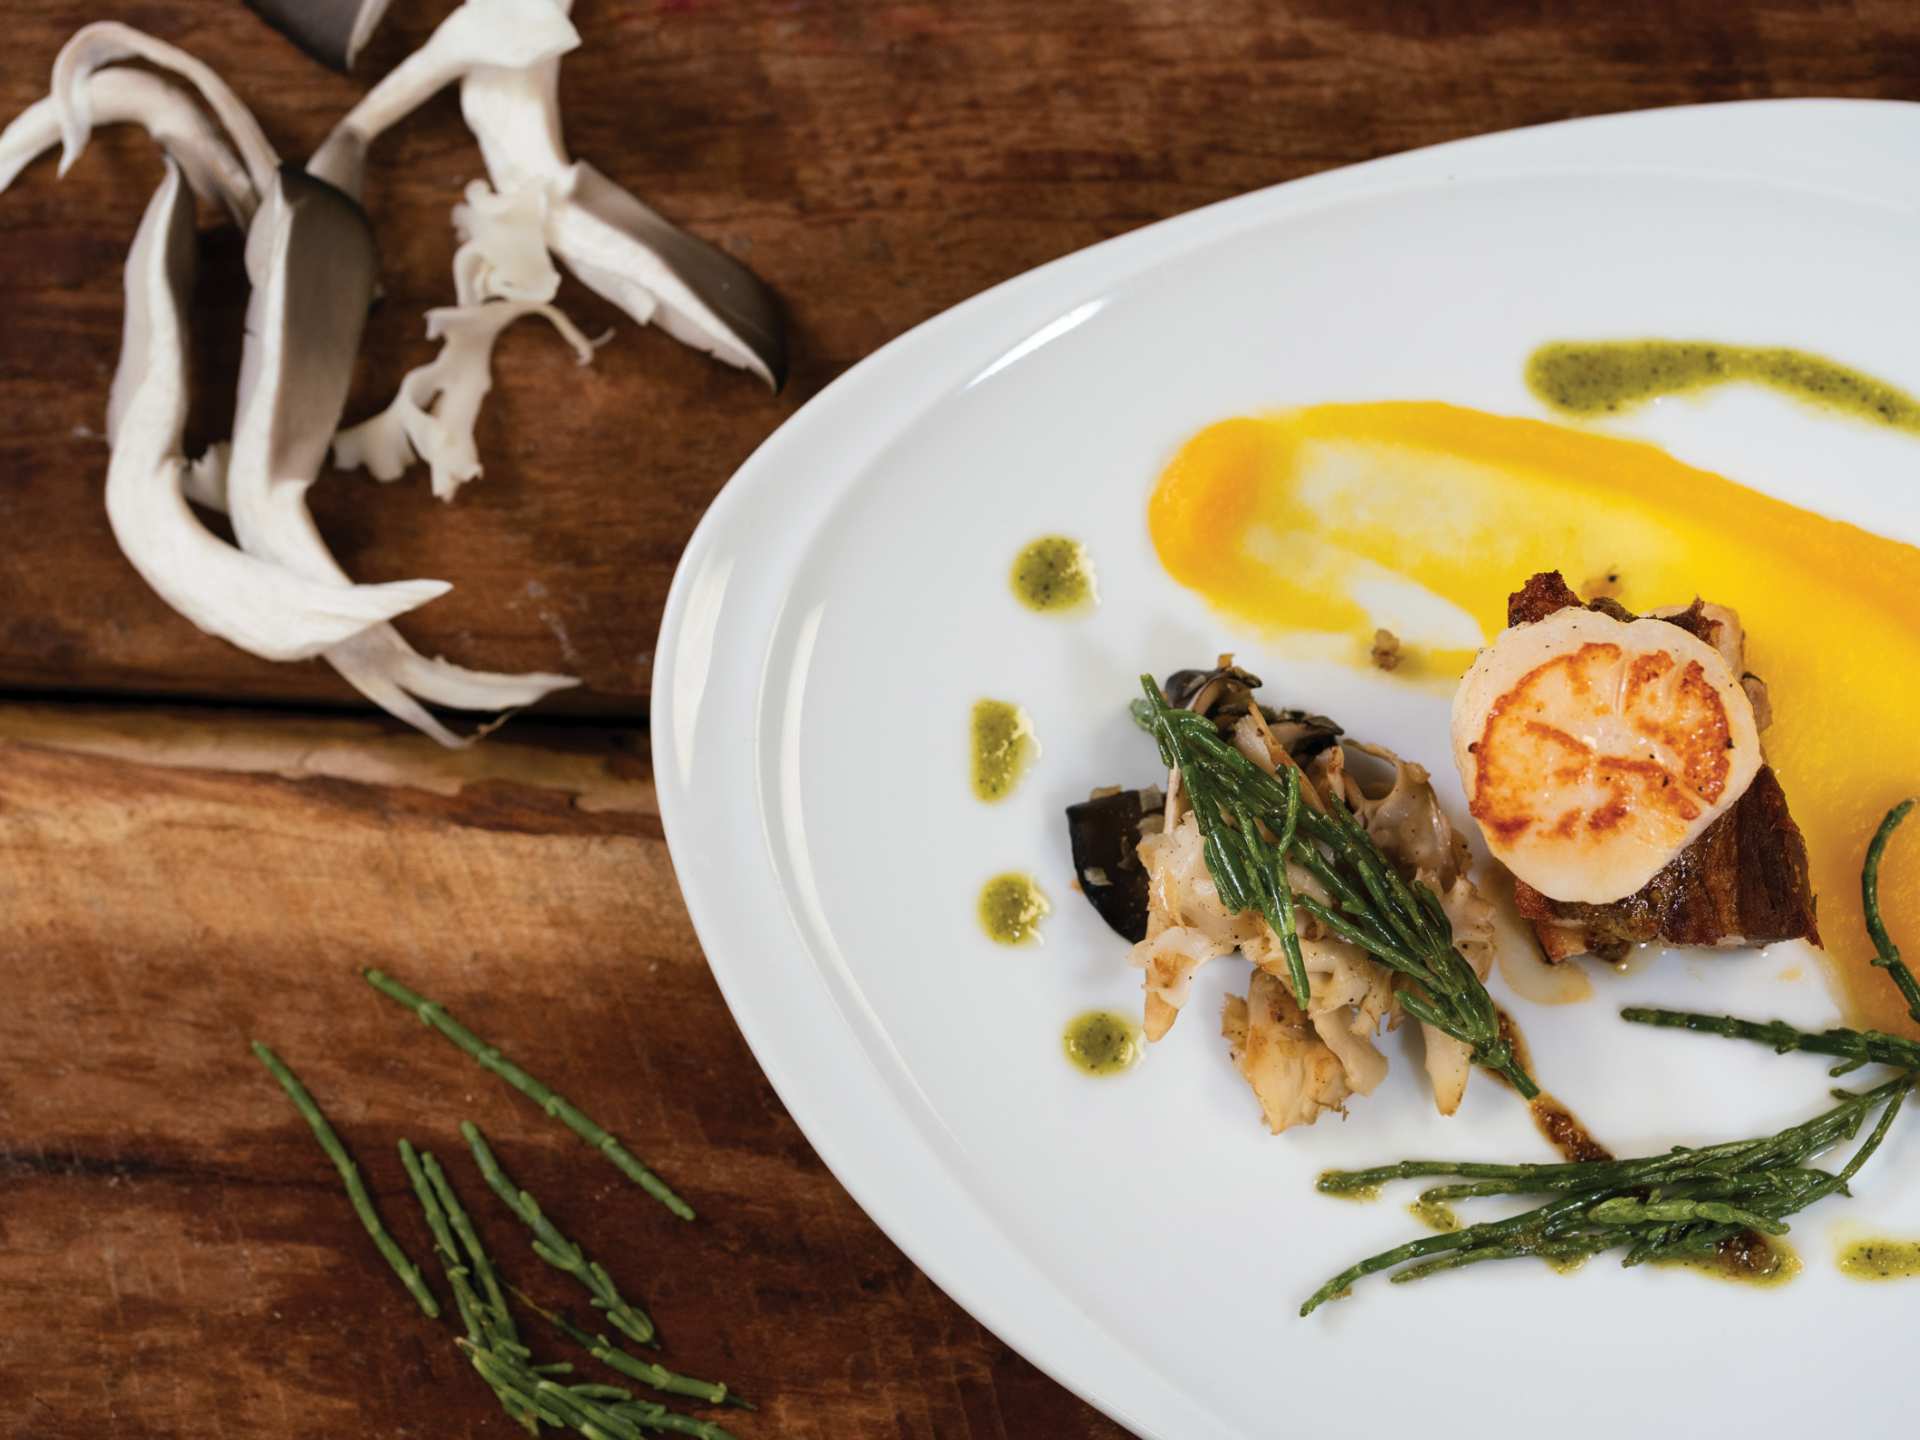 Niagara Park | A beautifully plated seafood dish at Table Rock House Restaurant